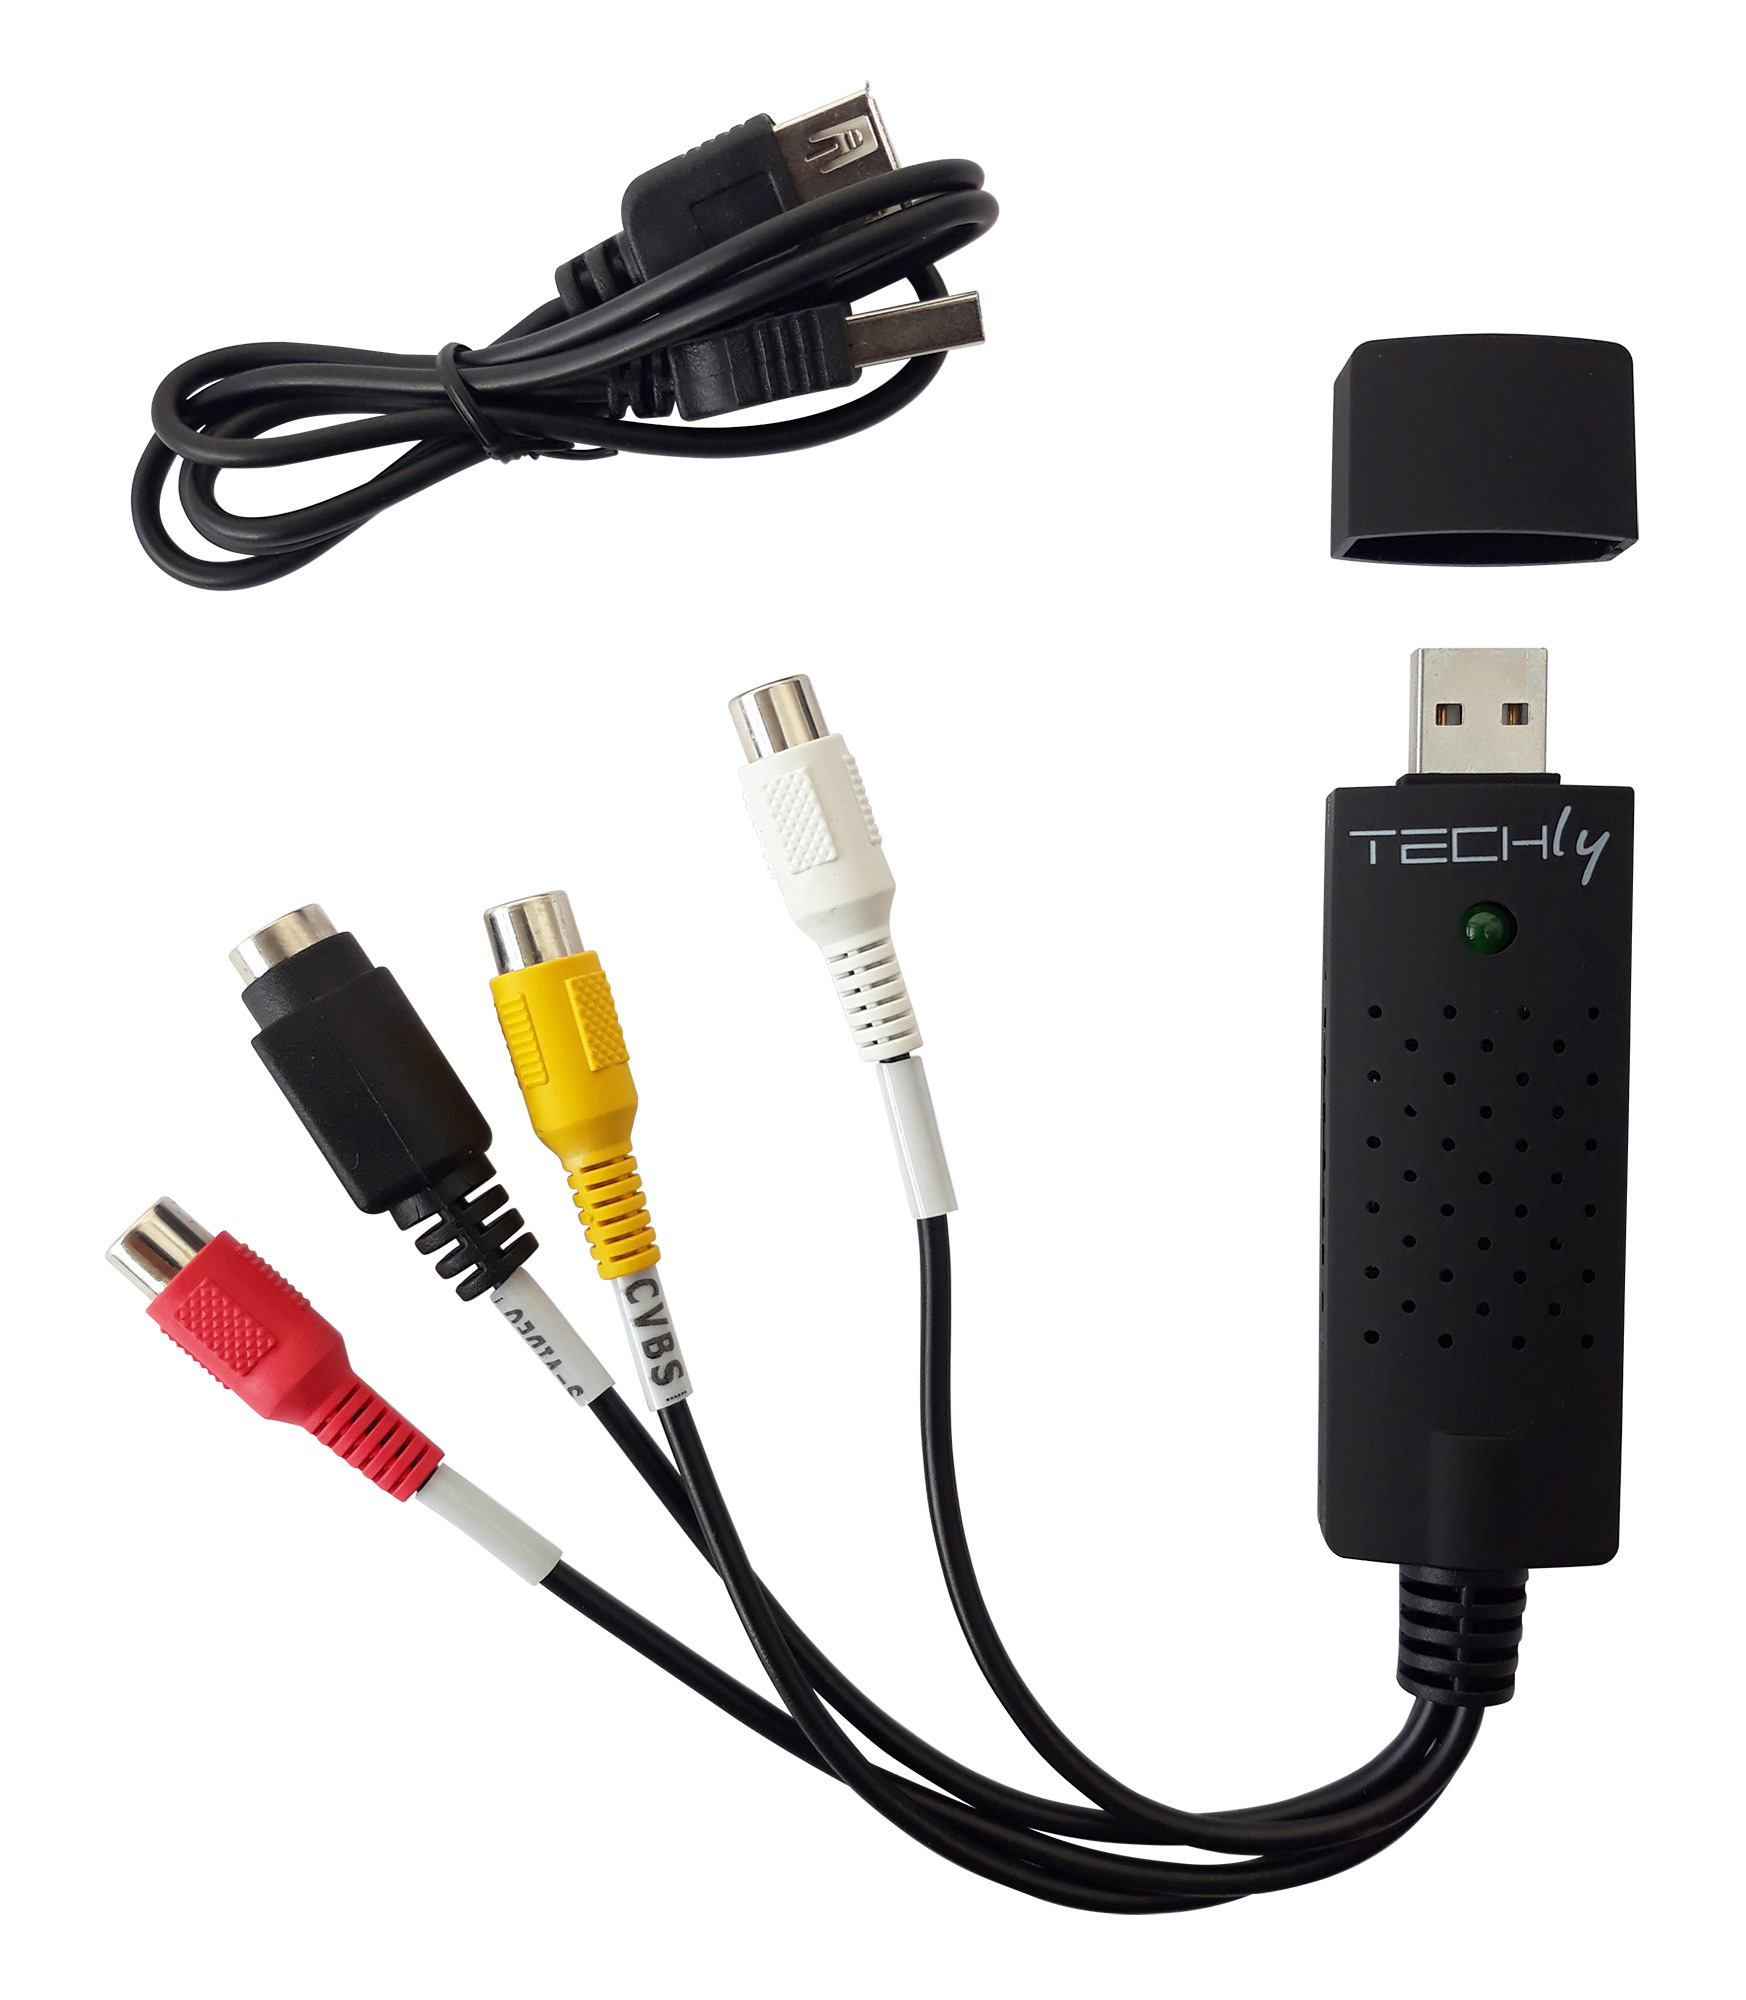 1*set USB Audio Video Capture Grabber Card Device Adapter Converter Windows8/10 